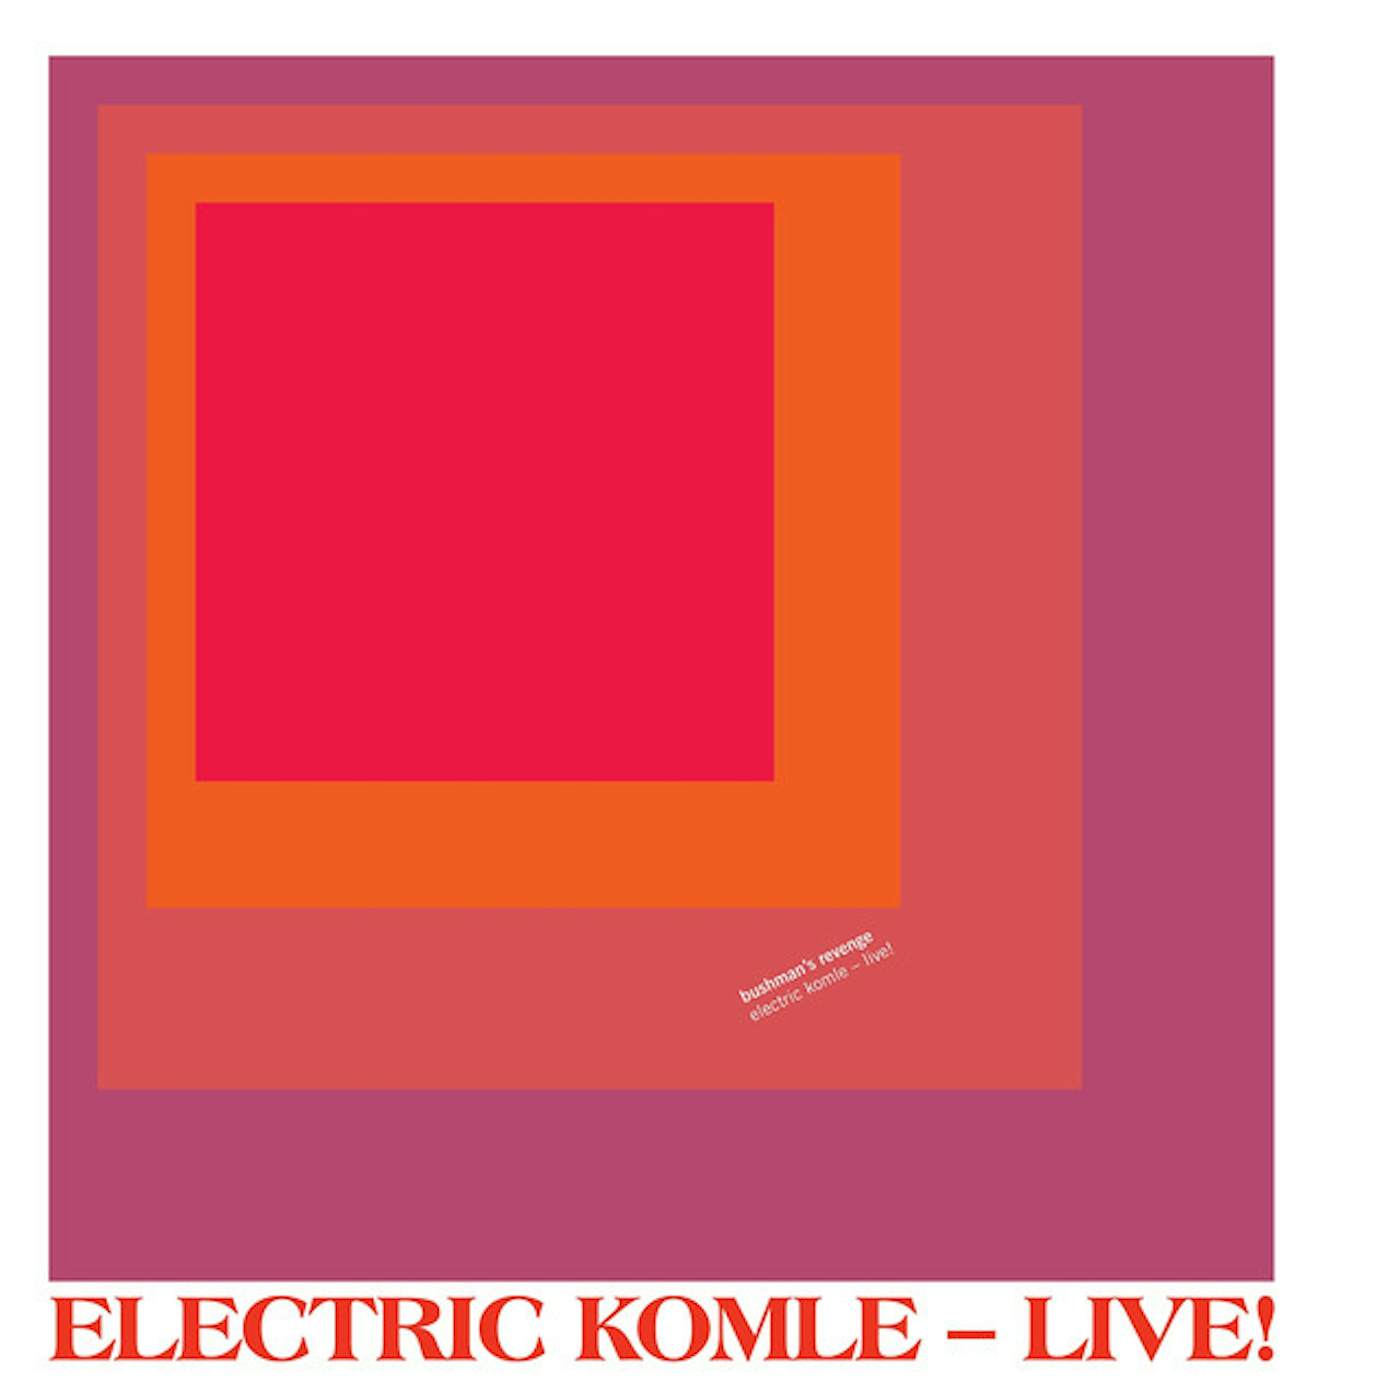 Bushman'S Revenge ELECTRIC KOMLE - LIVE Vinyl Record